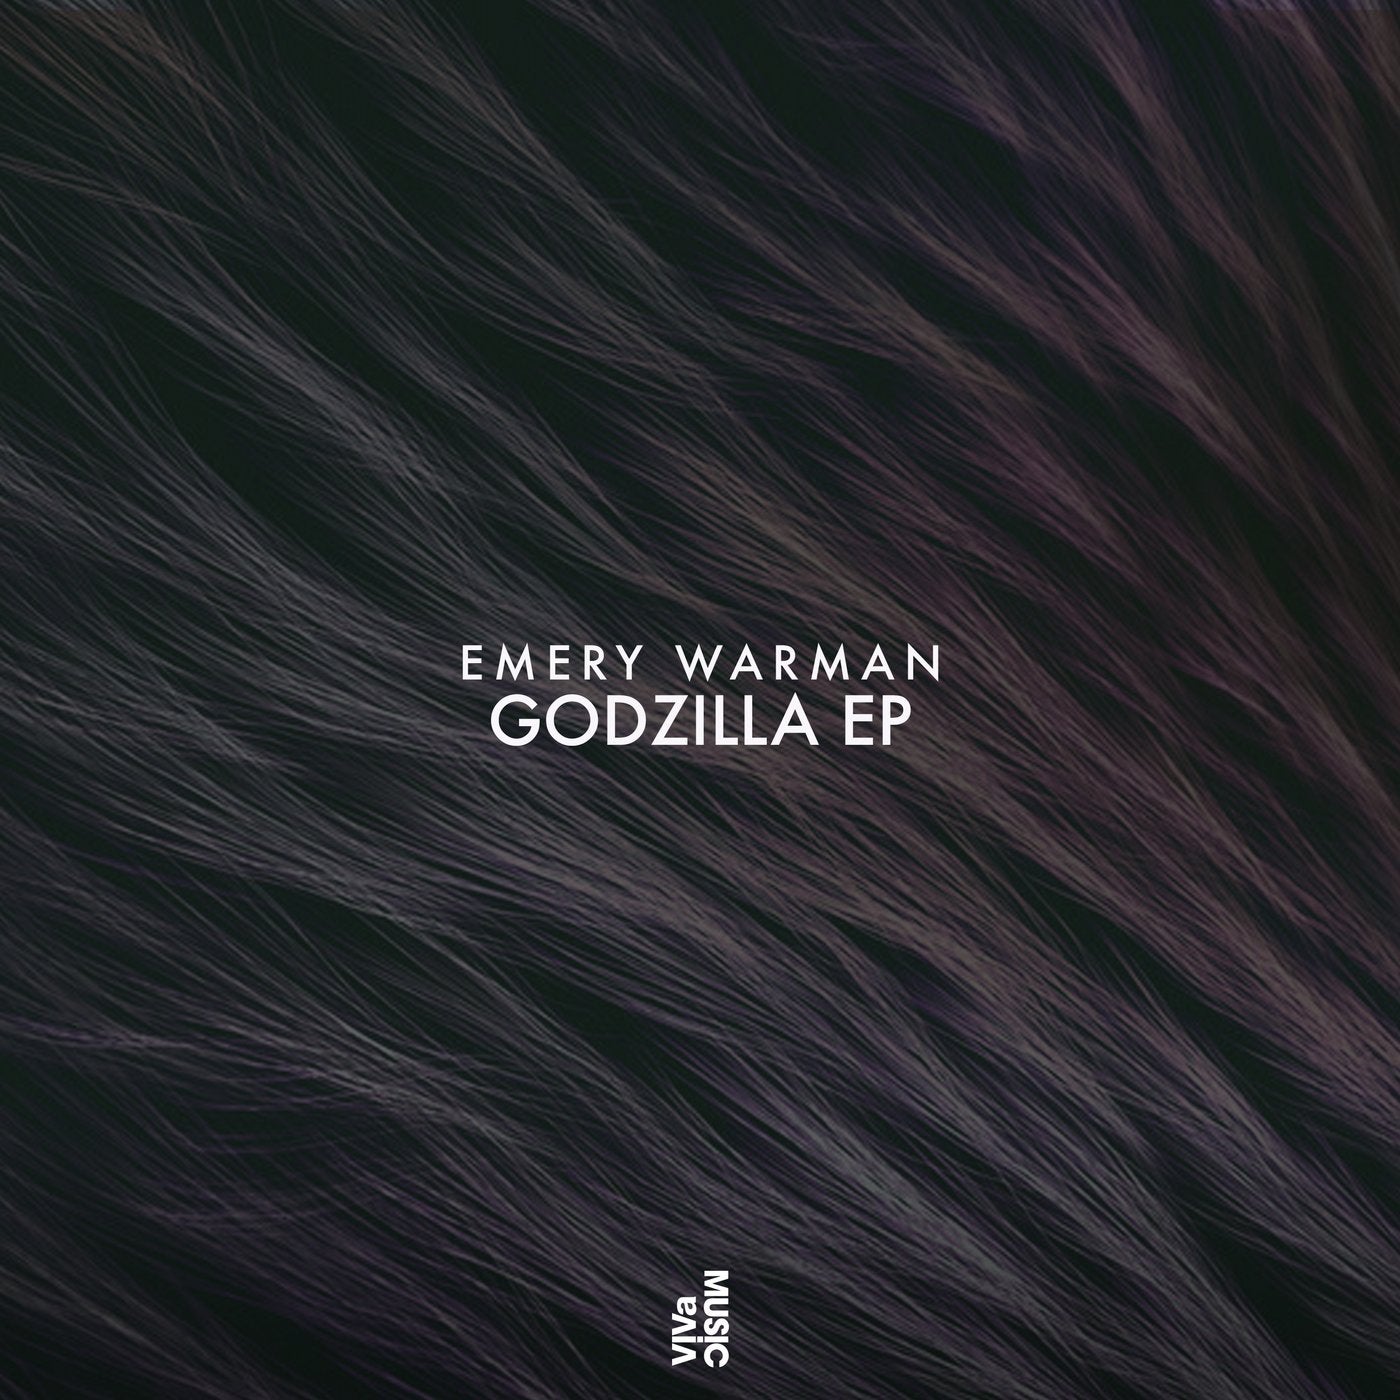 Godzilla EP